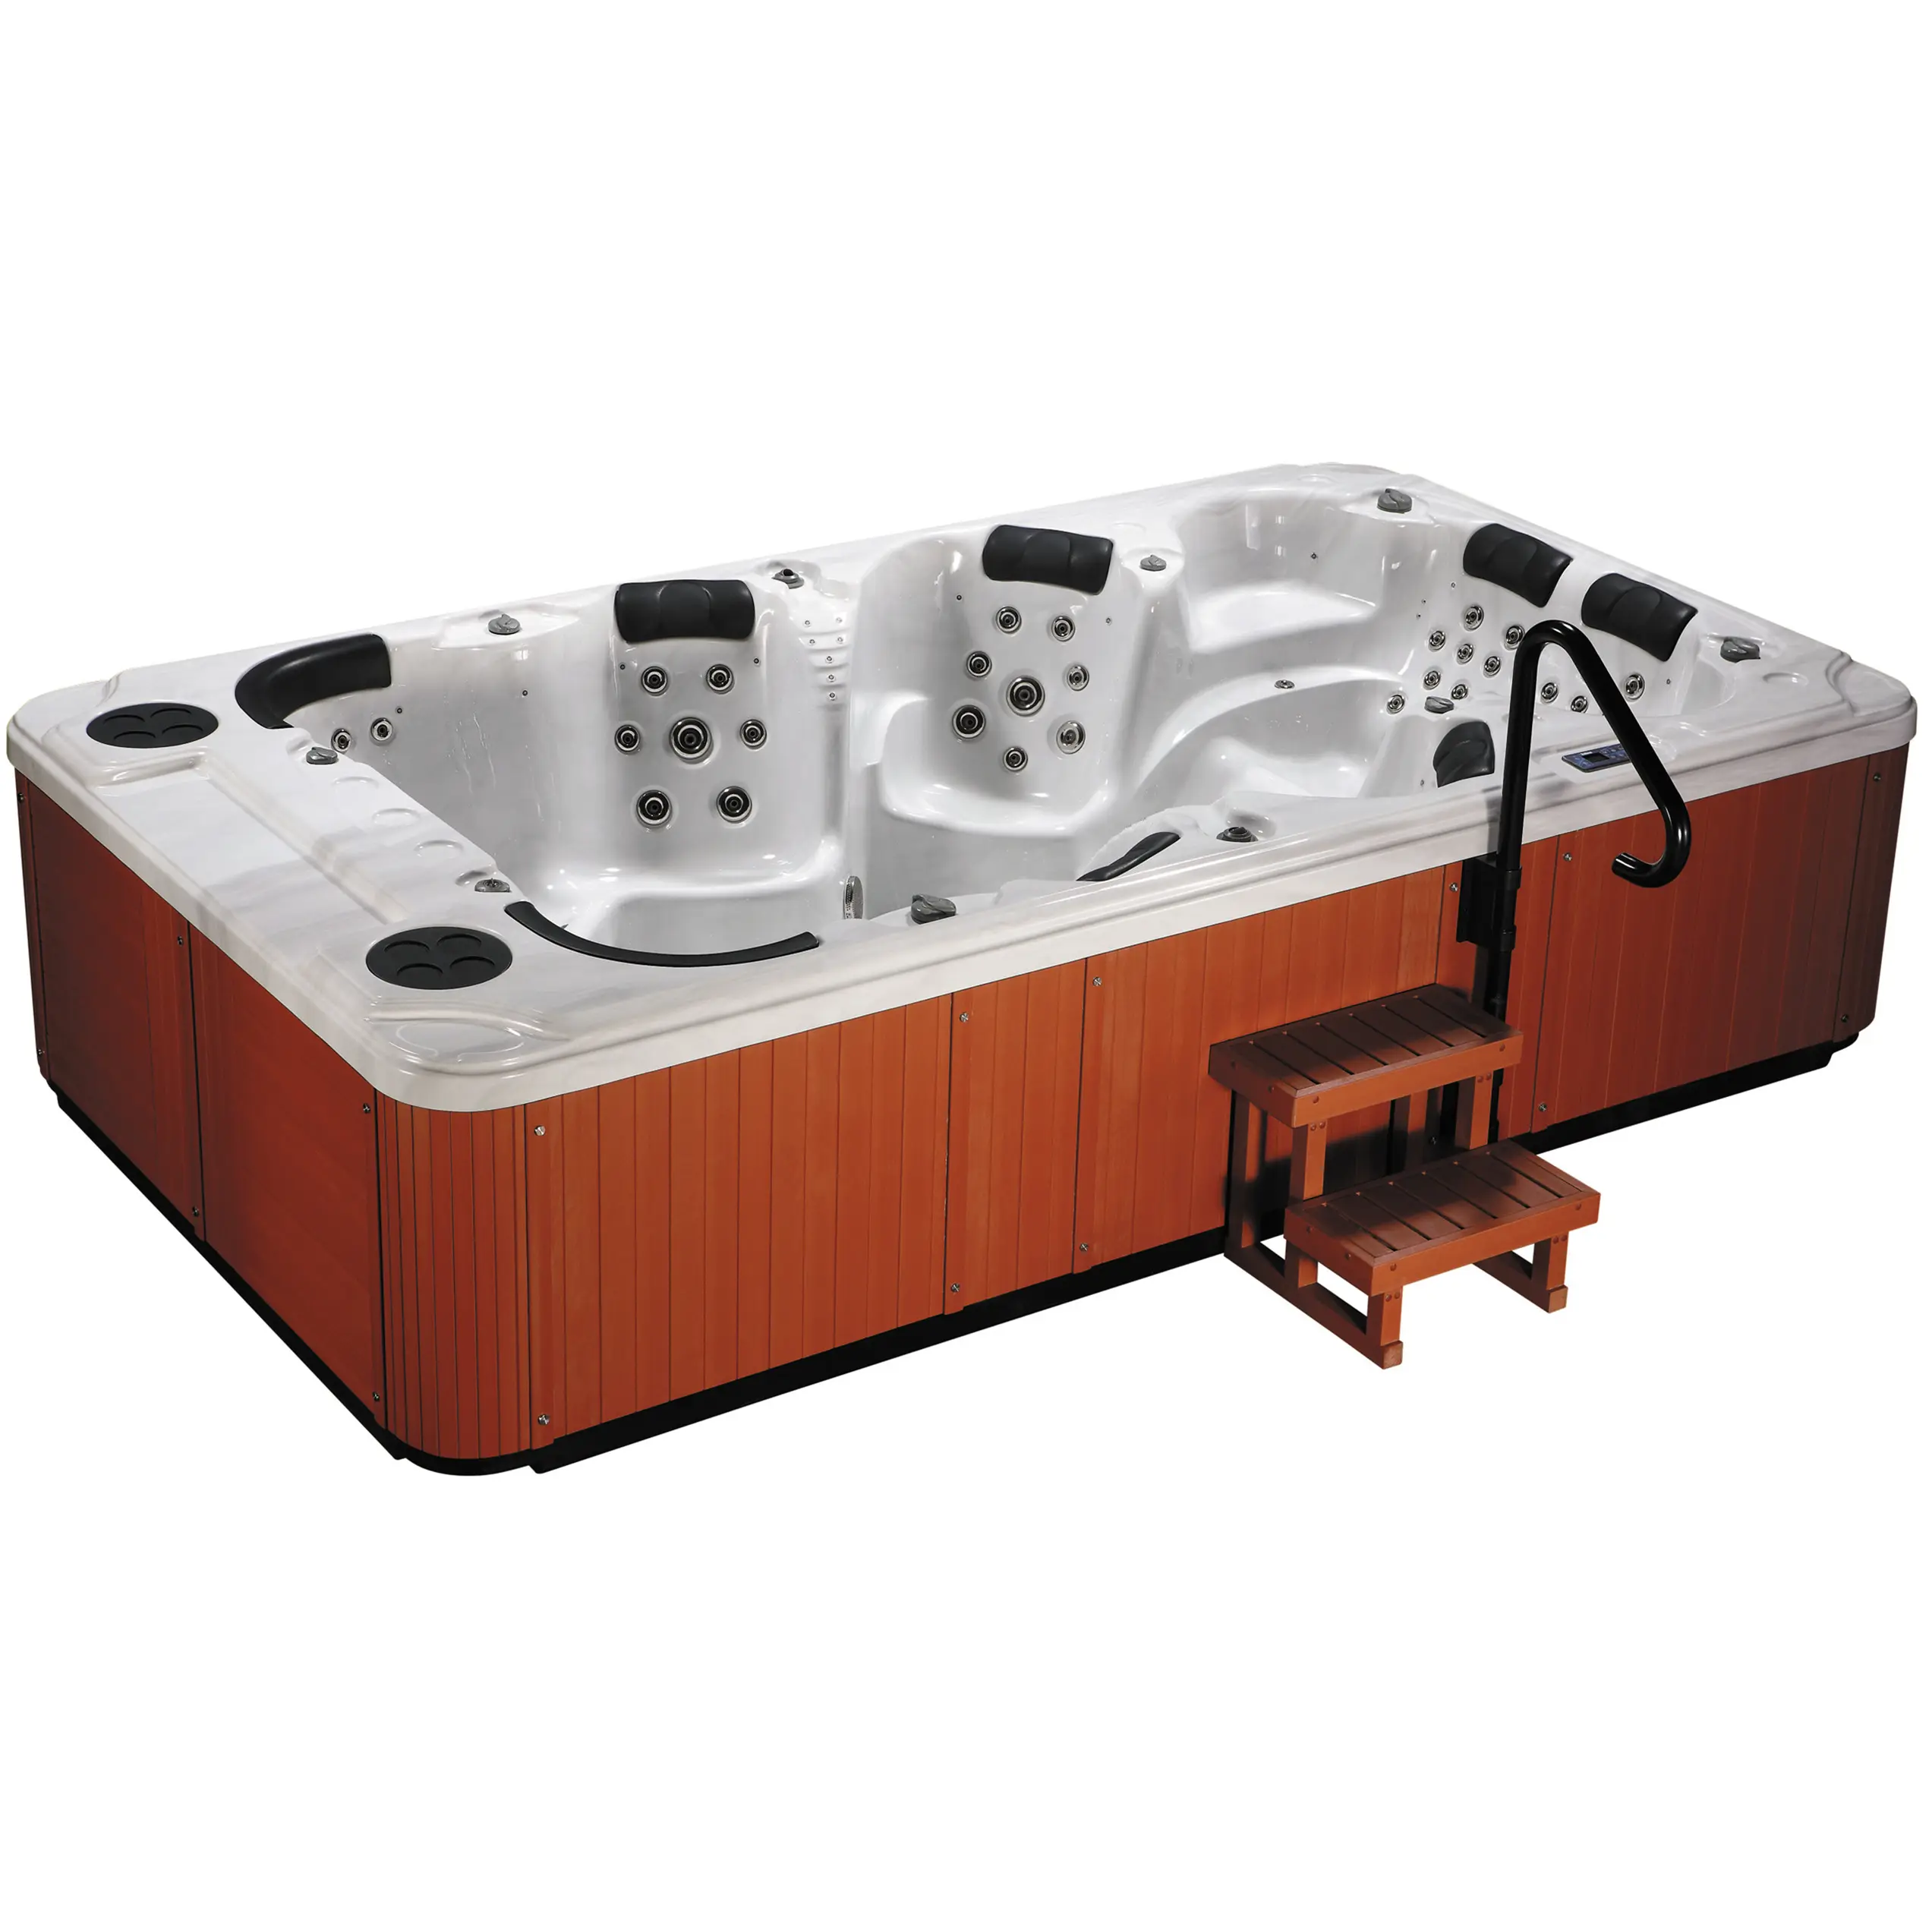 Joyspa Fabriek Hot Tub Acryl Hottub Tv Overloop Whirlpool Bad Buiten Spa